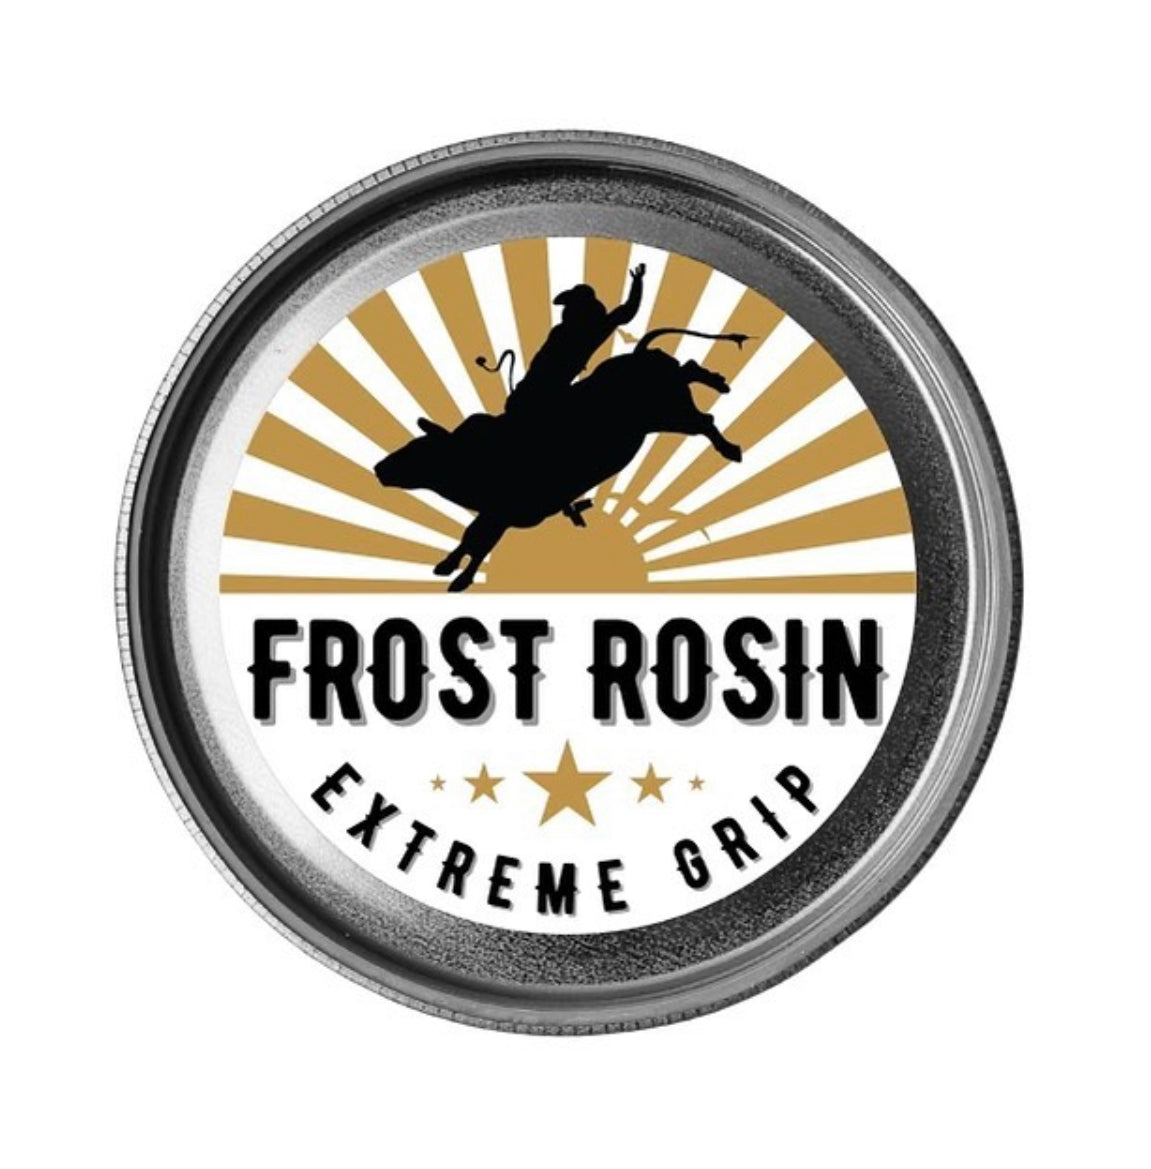 Medium (12 oz) Frost Rosin